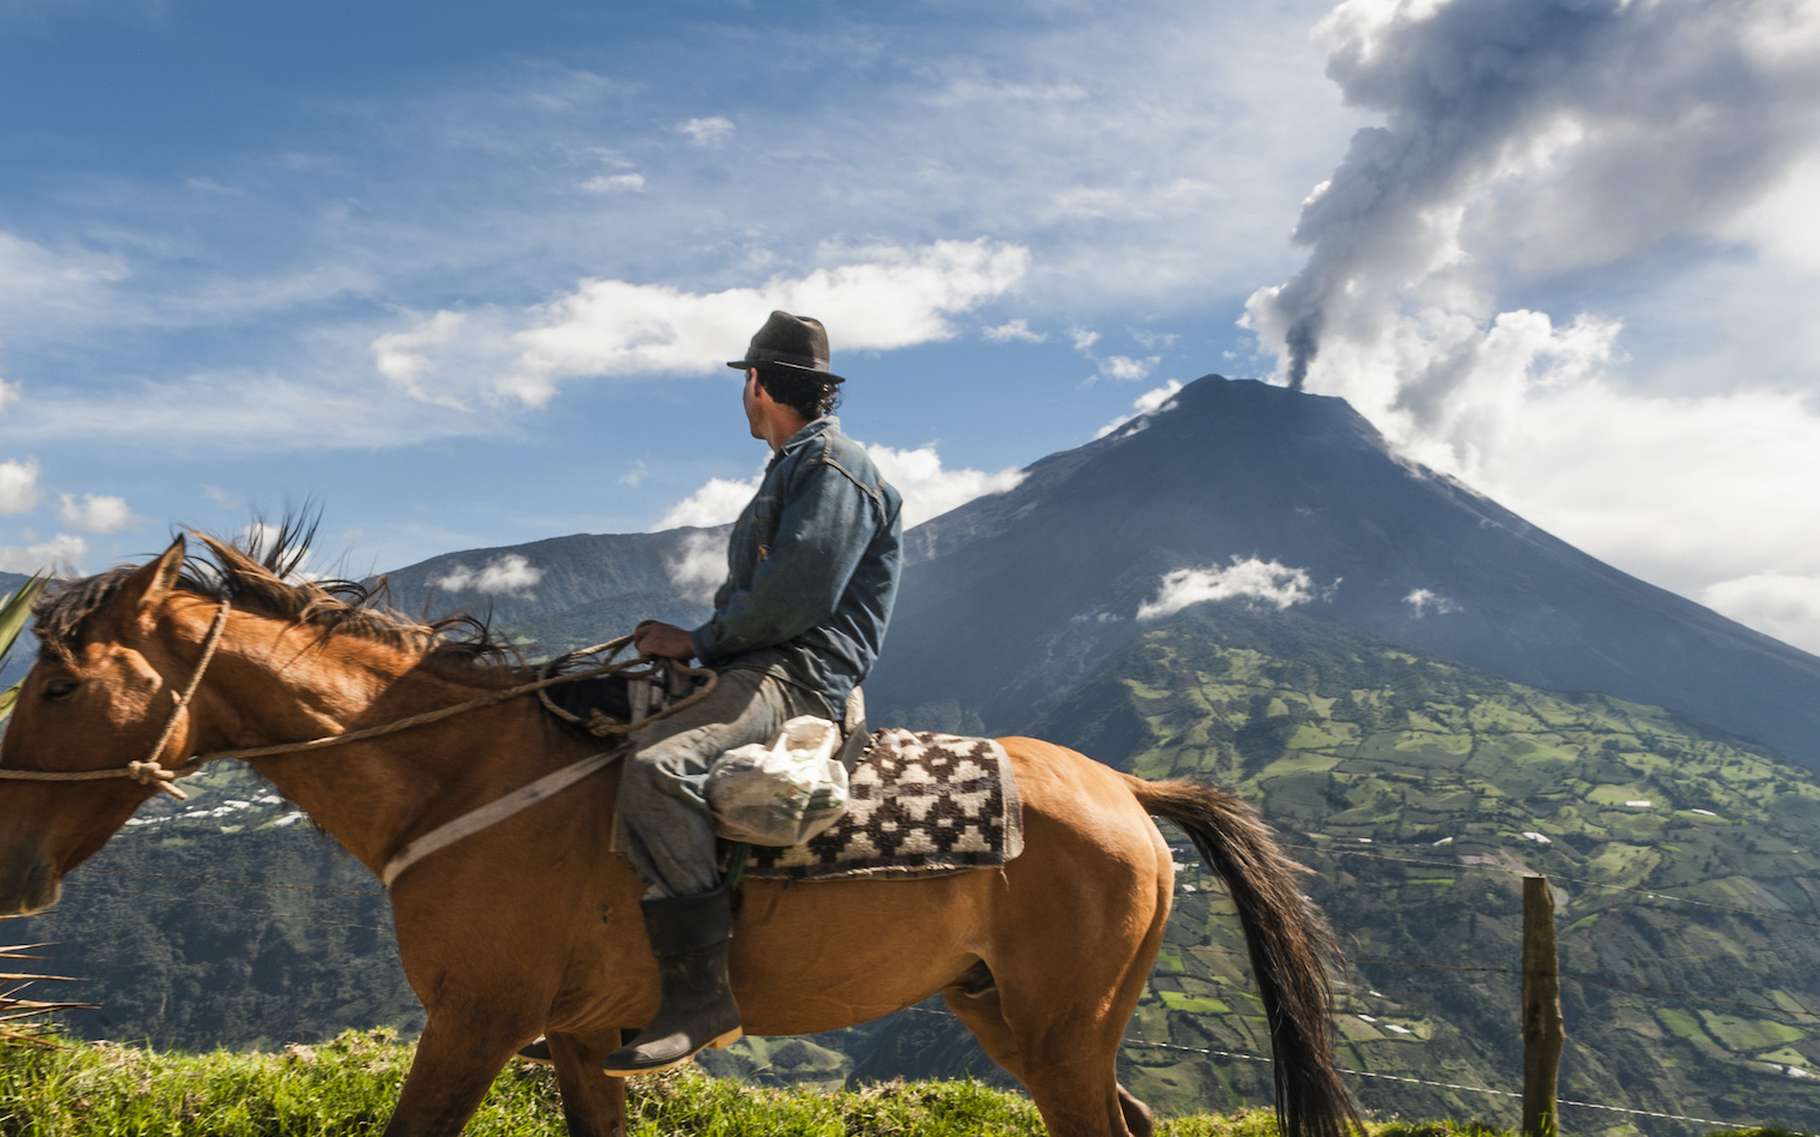 Le volcan Tungurahua menace de s'effondrer